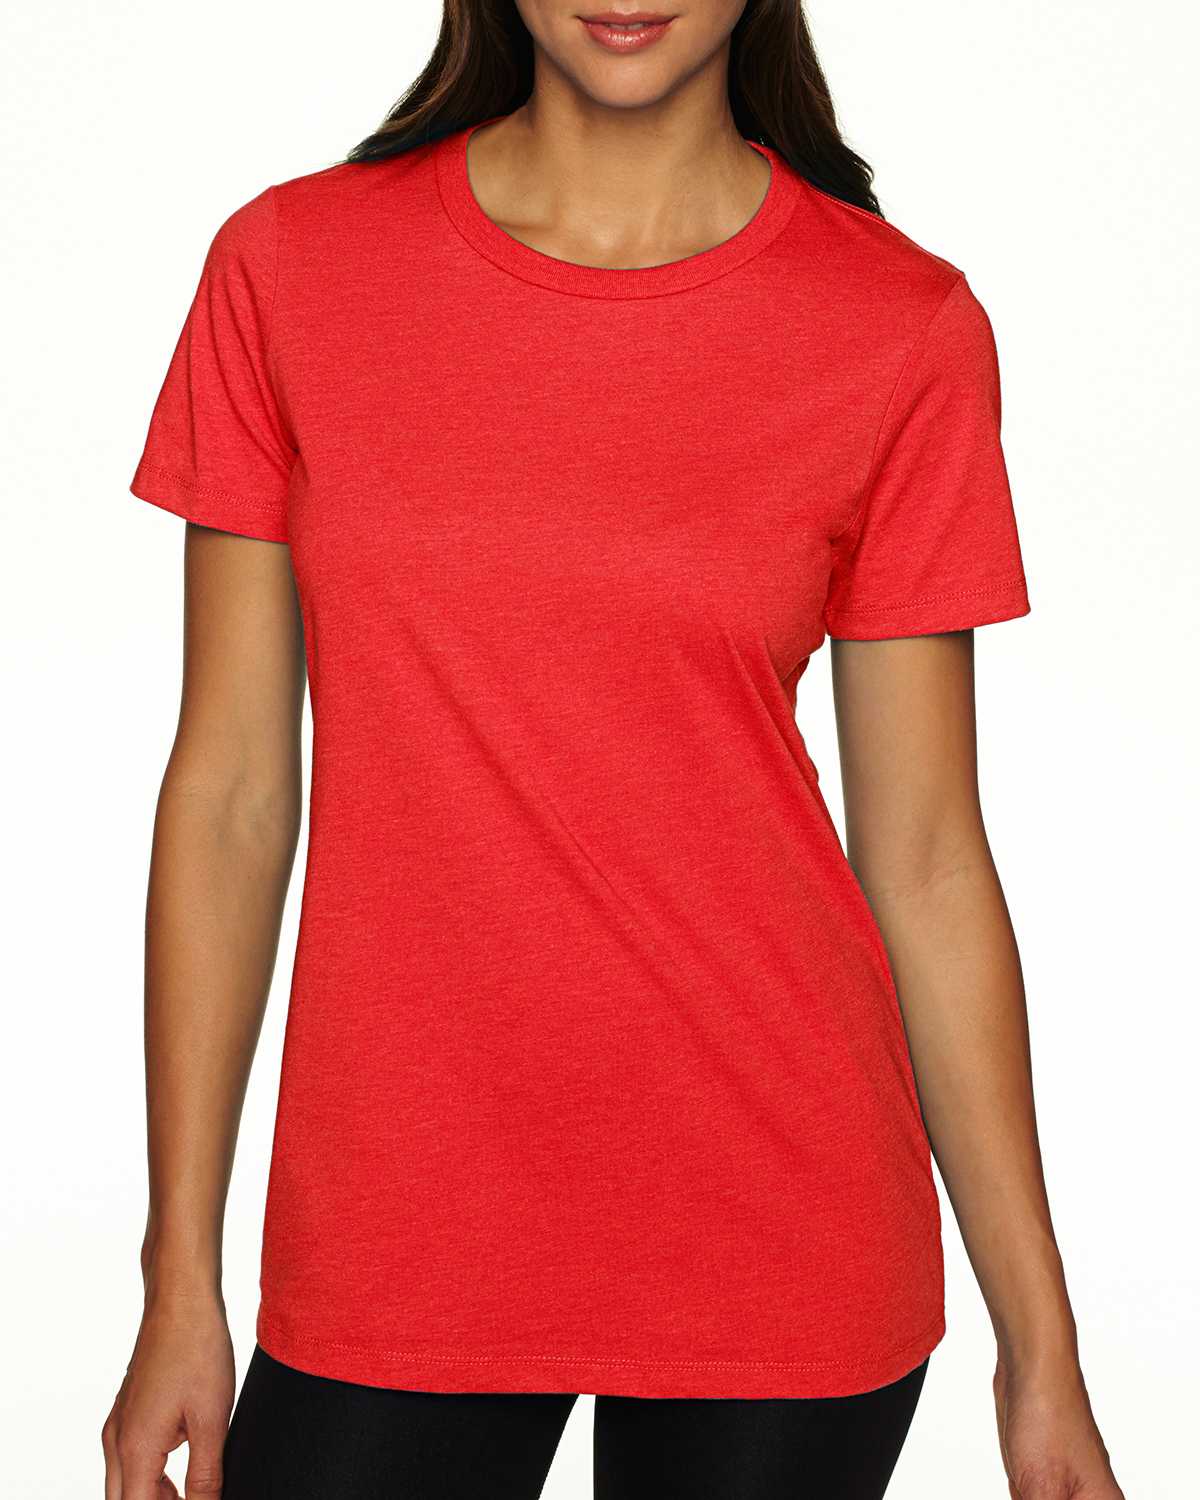 Next Level 6610 Ladies' CVC T-Shirt | ApparelChoice.com